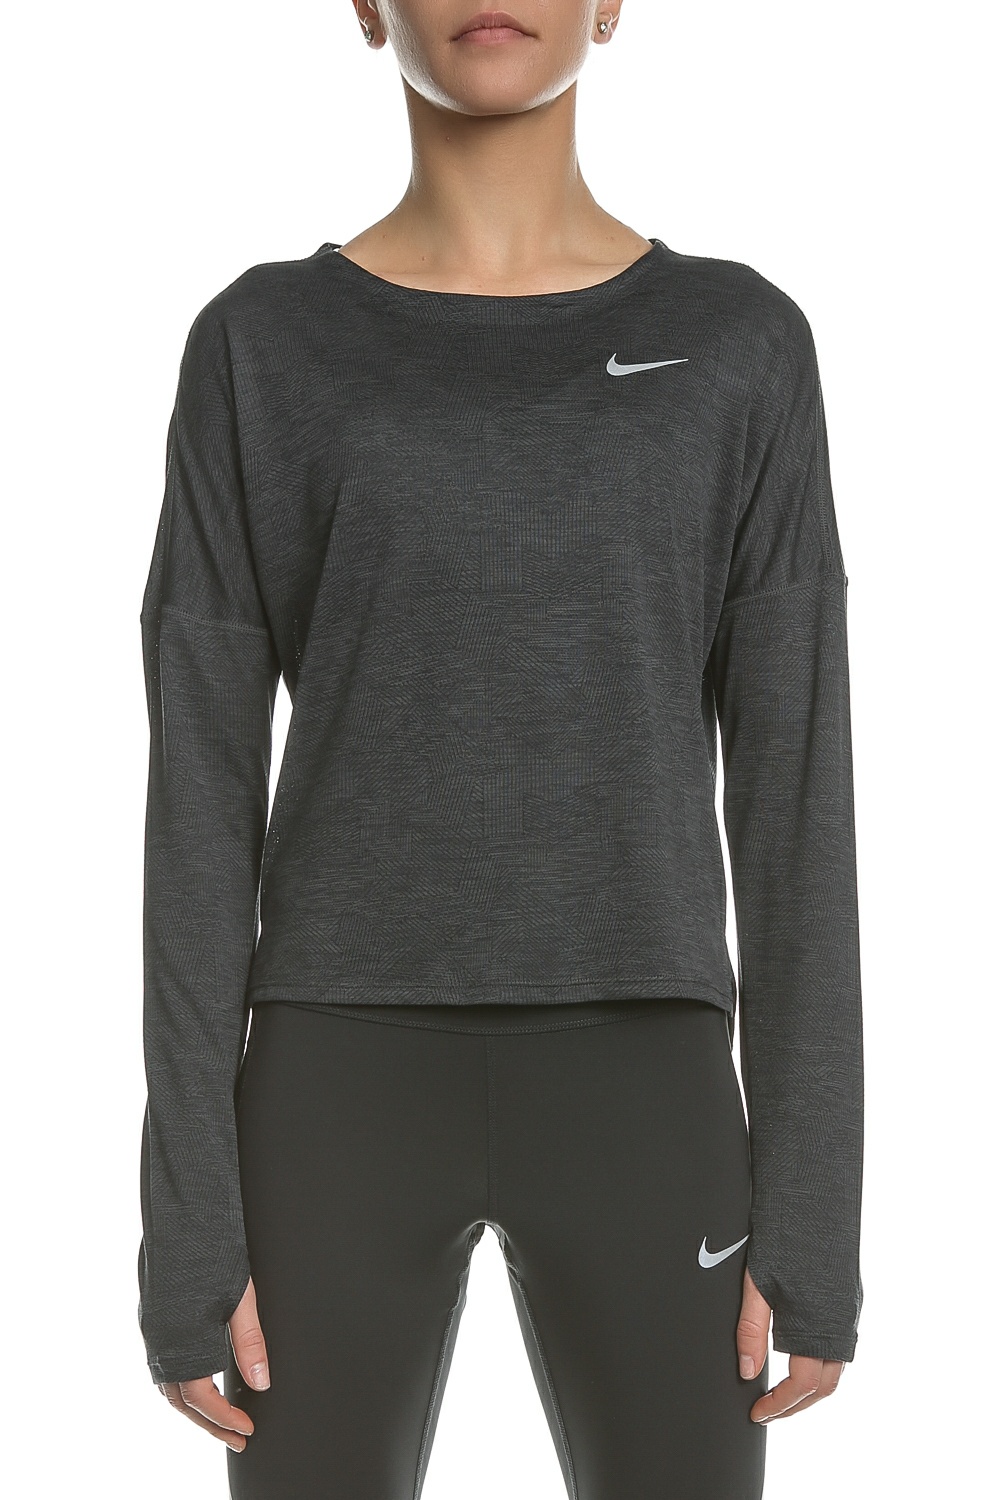 NIKE – Γυναικεία μακρυμάνικη μπλούζα Nike DRY MEDALIST γκρι